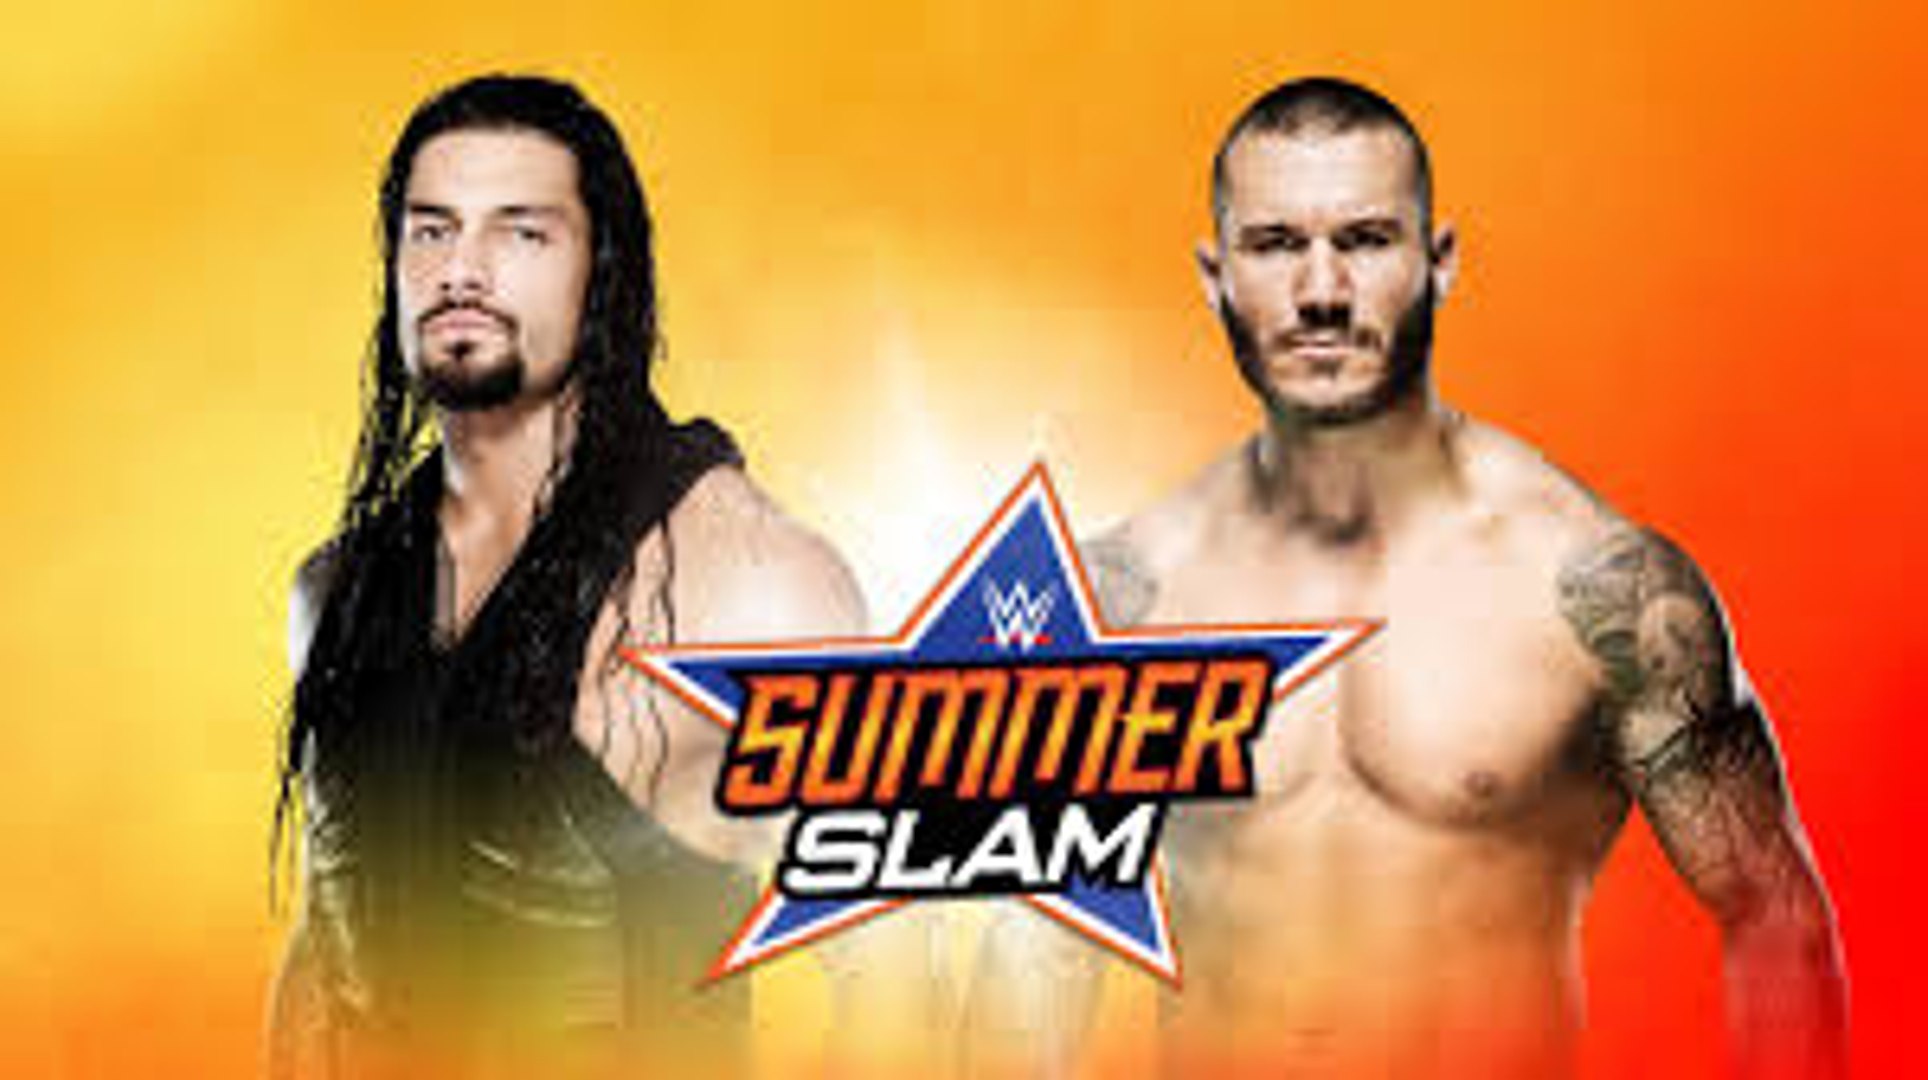 Wwe Summerslam 2014 Randy Orton Vs Roman Reigns Video Dailymotion